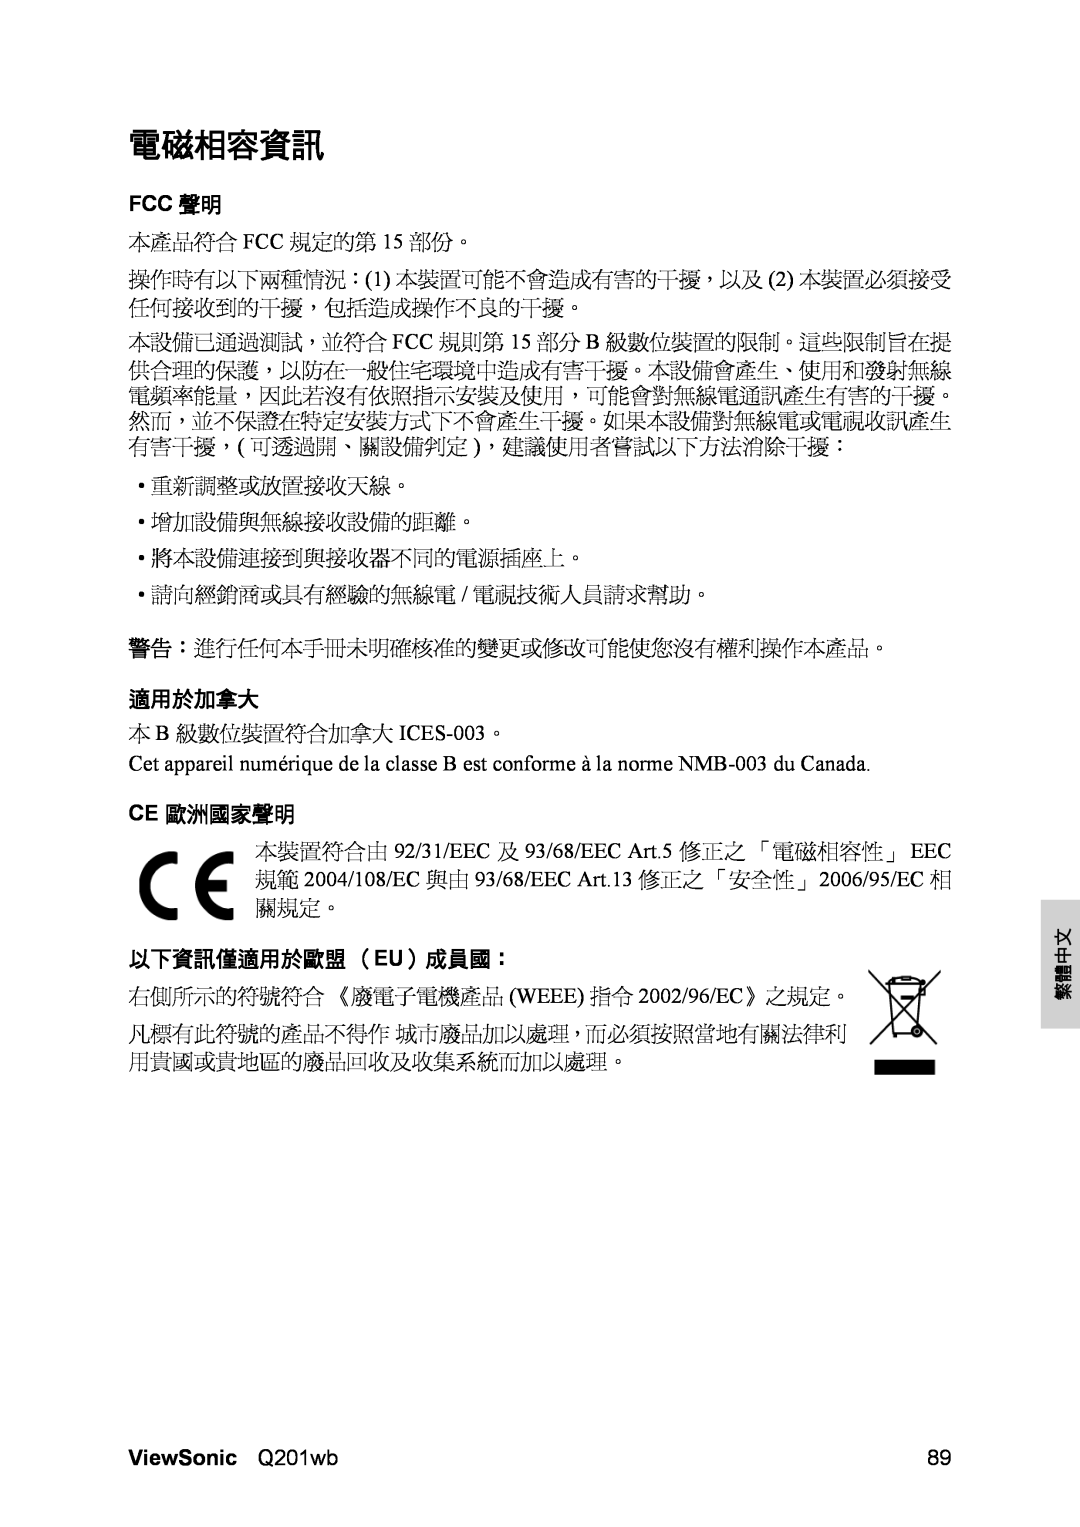 Optiquest VS12106 manual 電磁相容資訊, 適用於加拿大, Ce 歐洲國家聲明, 以下資訊僅適用於歐盟 （Eu）成員國： 